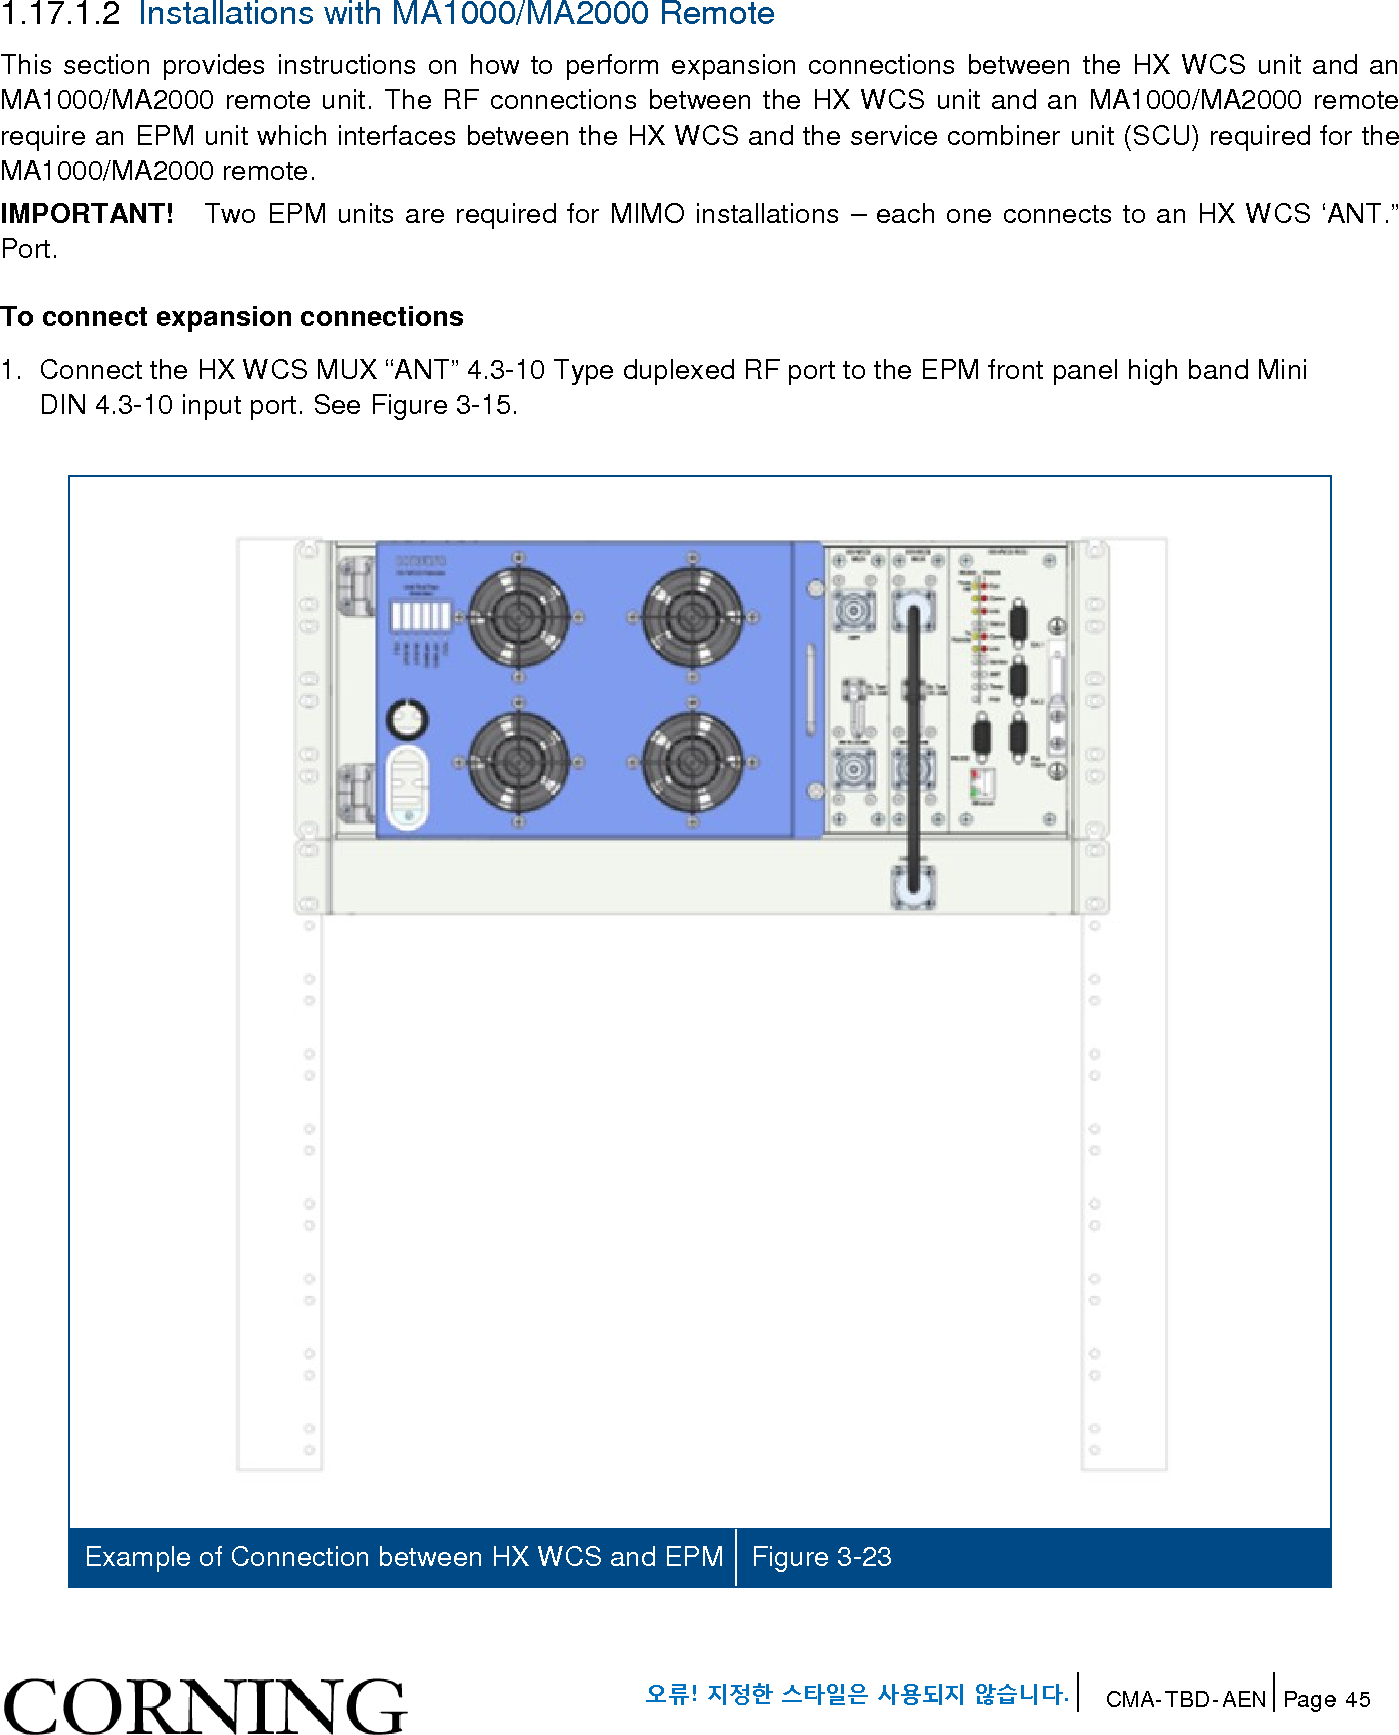 Page 45 of Corning Optical Communication HX-WCS-MIMO Optical RepeaterModel name - HX-WCS-MIMO User Manual HX WCS